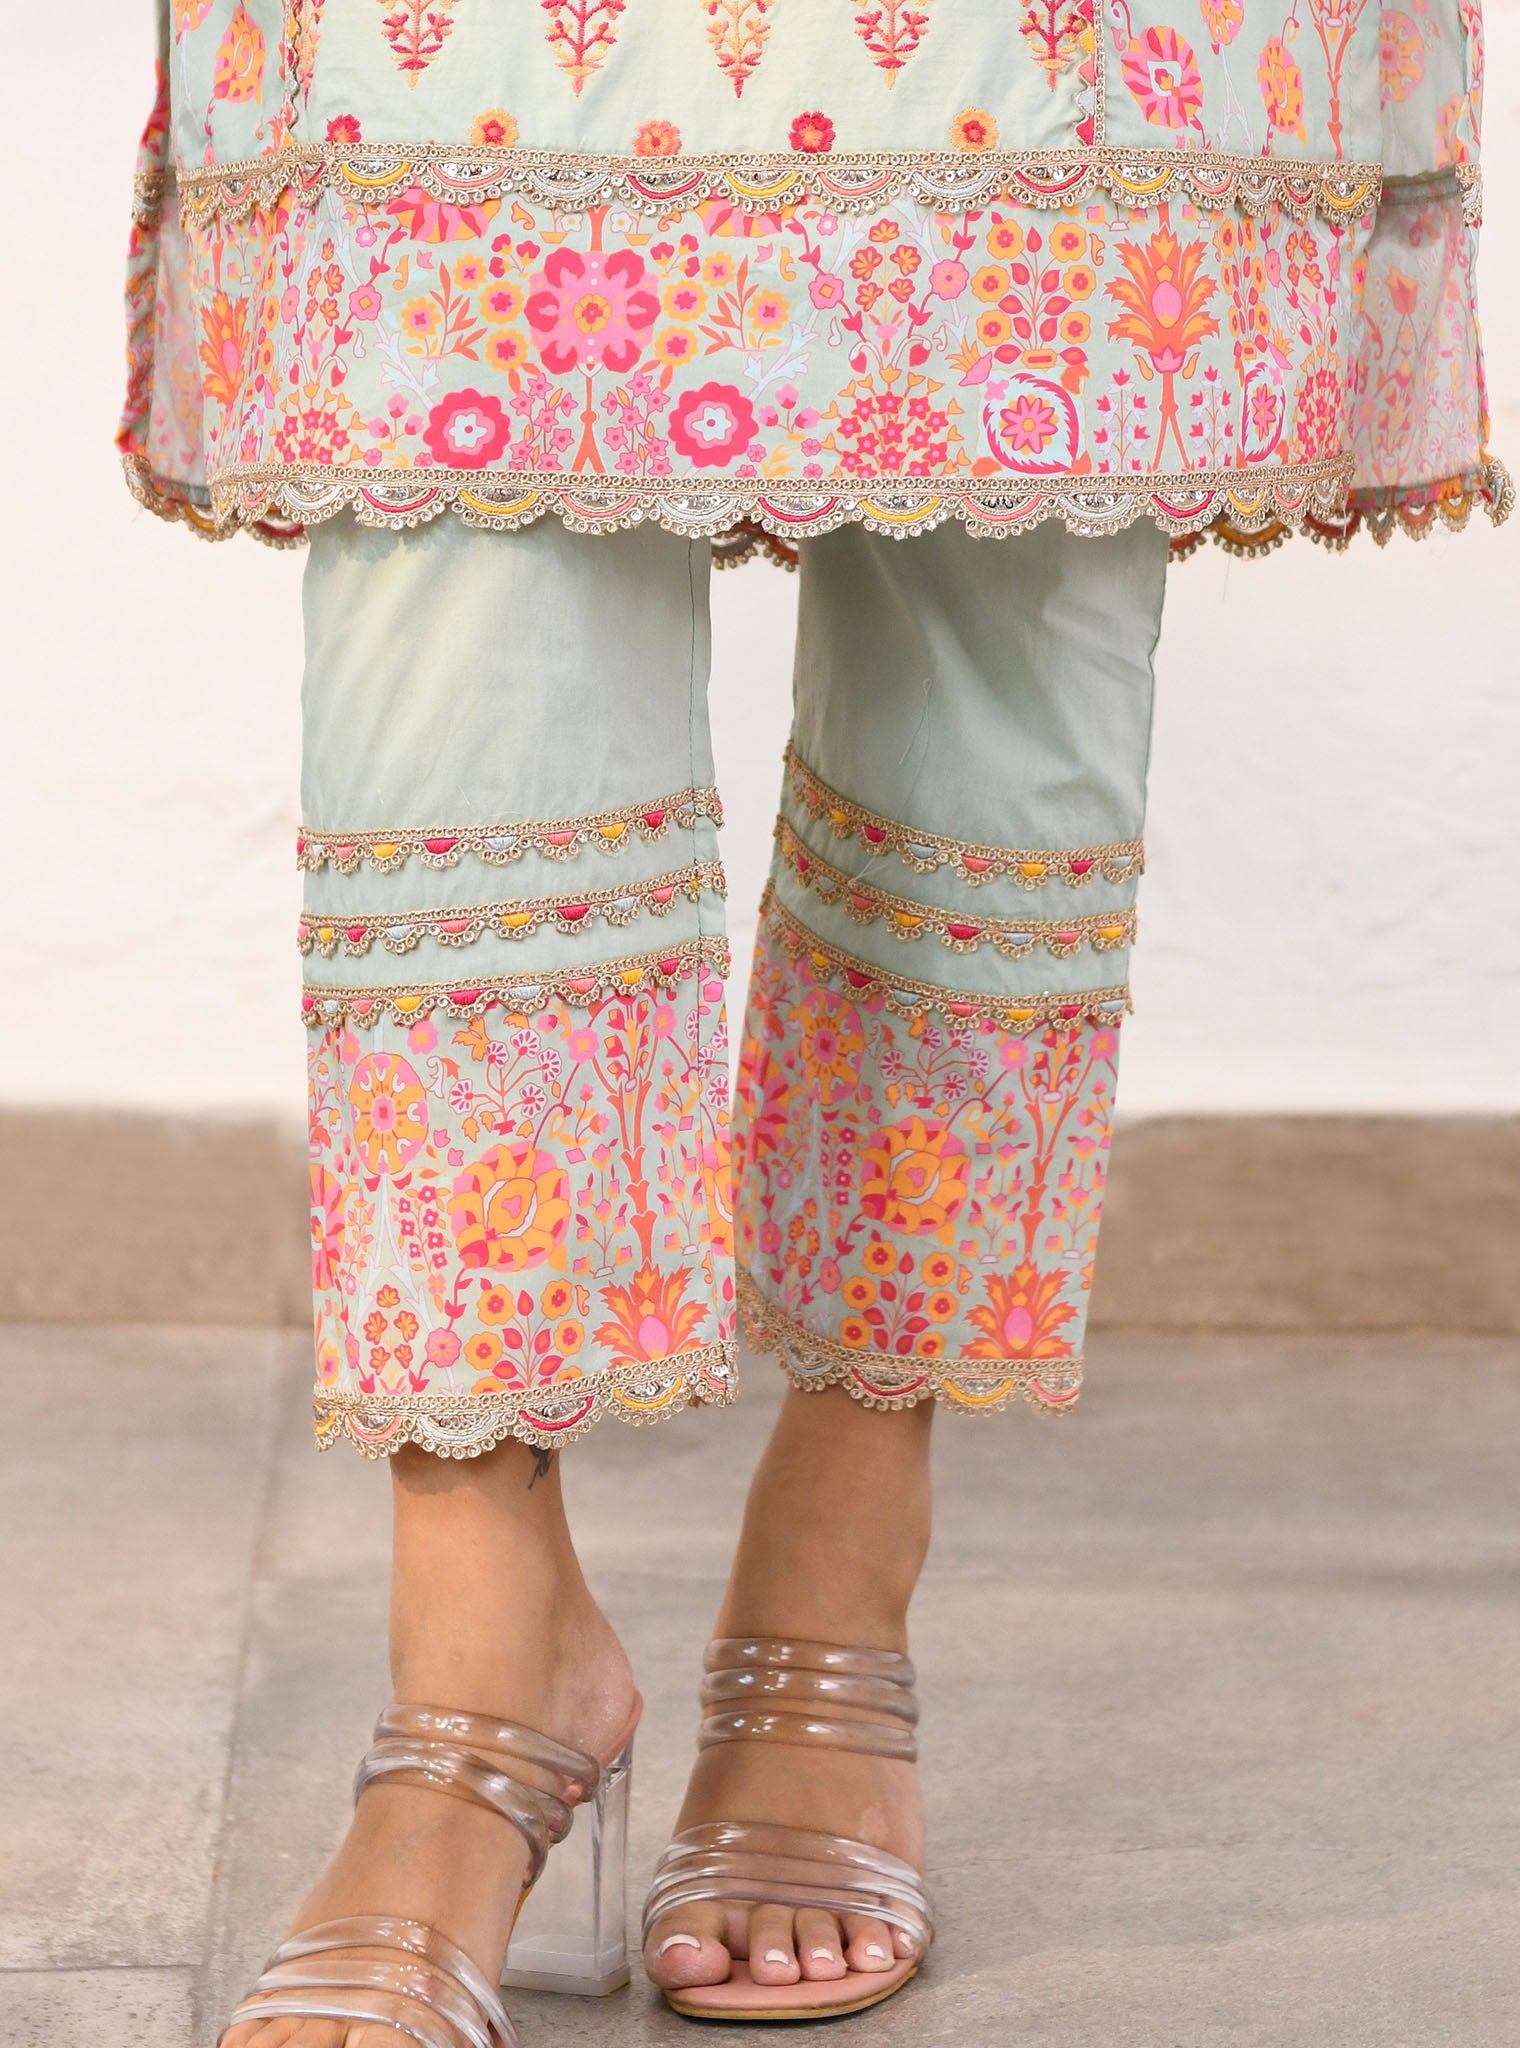 trouser pant design for girl/mohri poncha design for pakistani ladies -  YouTube